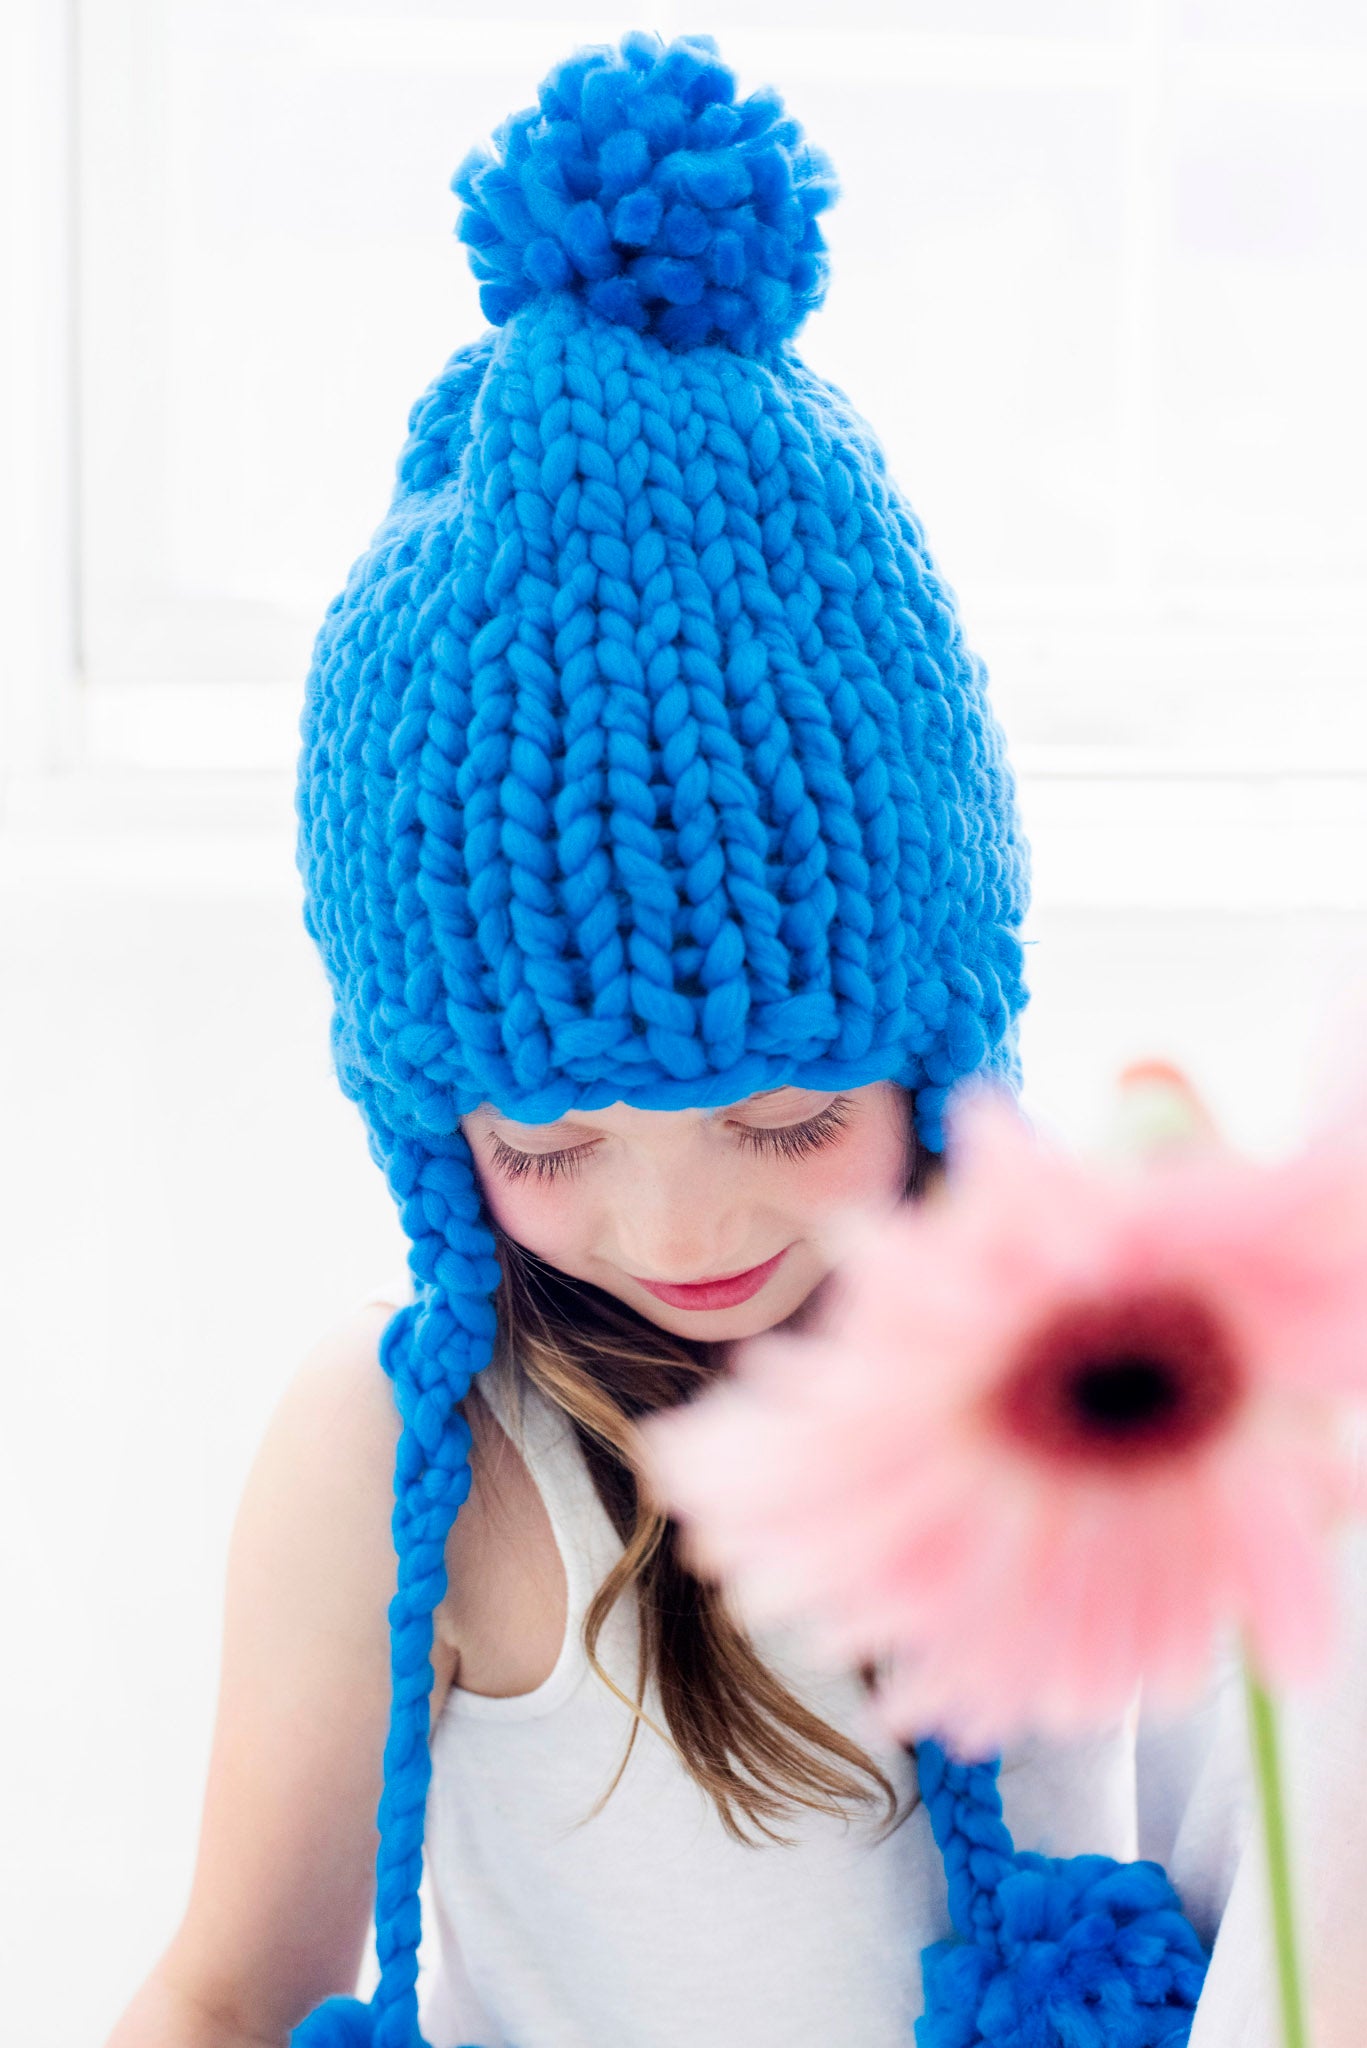 Reversible Hat: Crochet, Knit, Loom Knit or Addi Express!